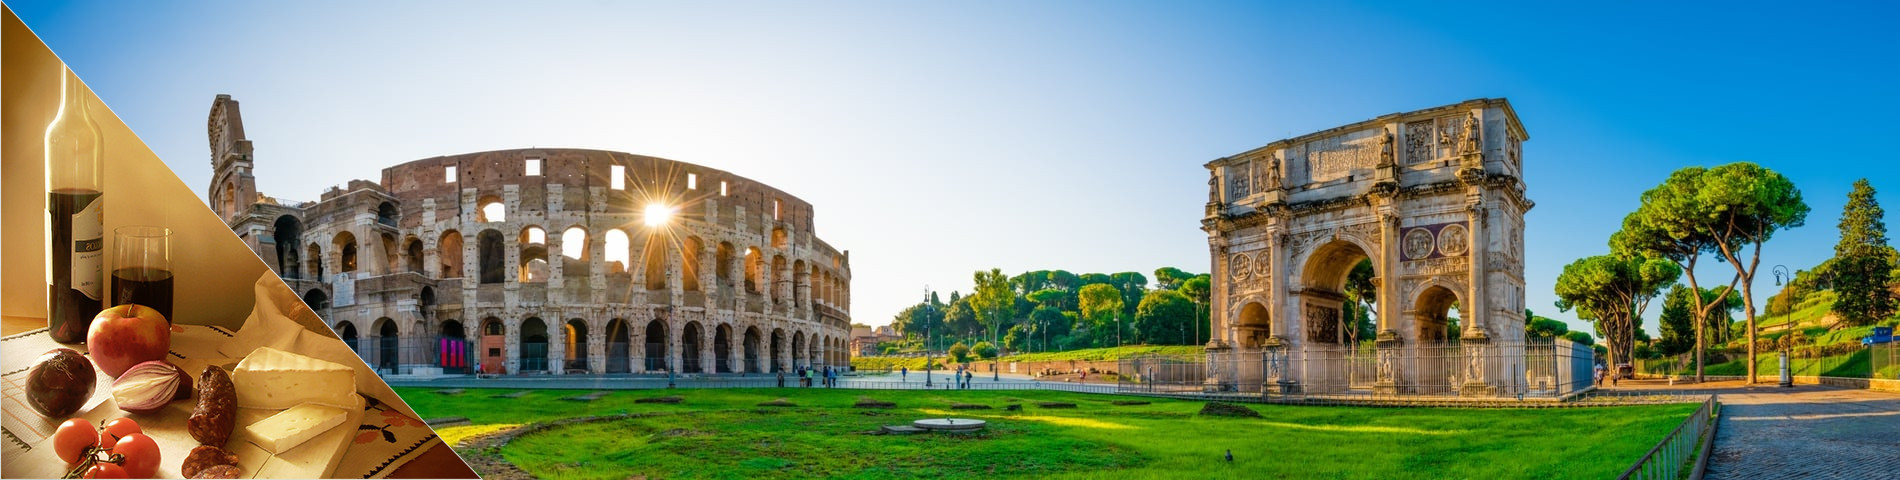 Rome - Italien & Culture